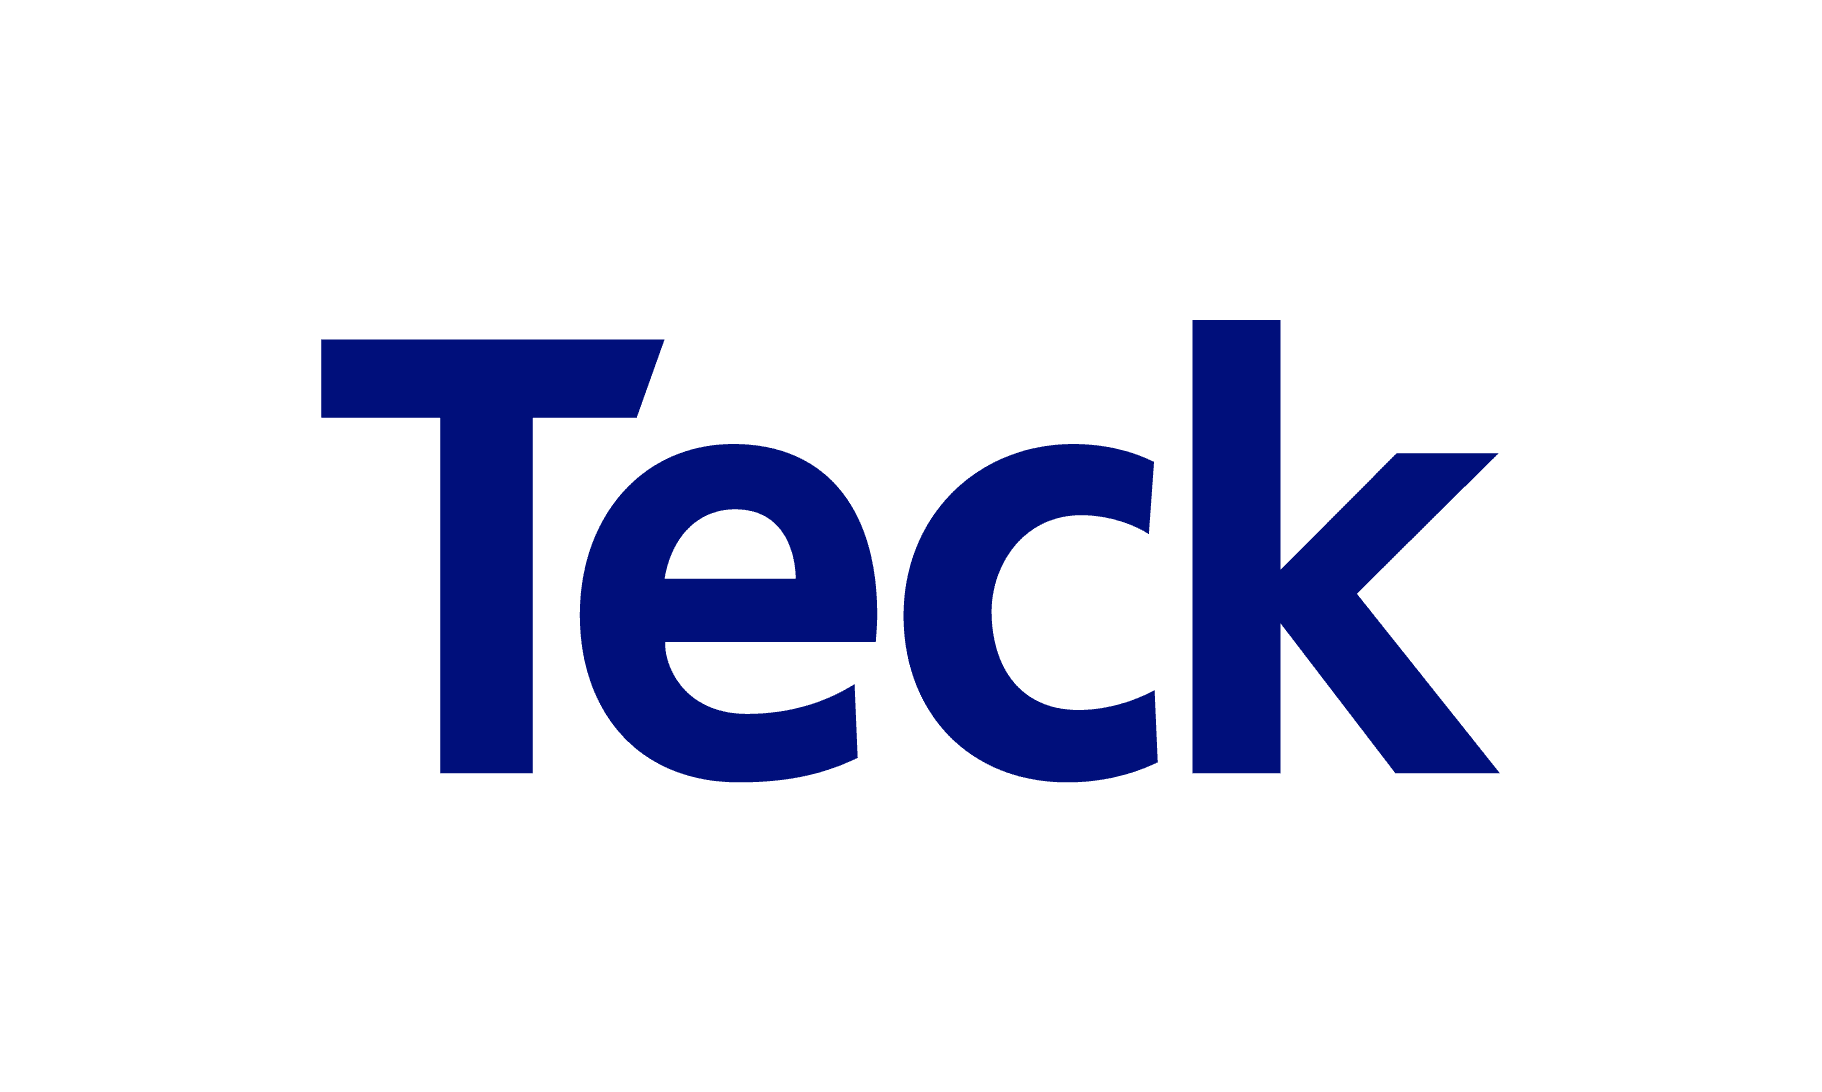 teck_logo_RGB_TECK-BLUE